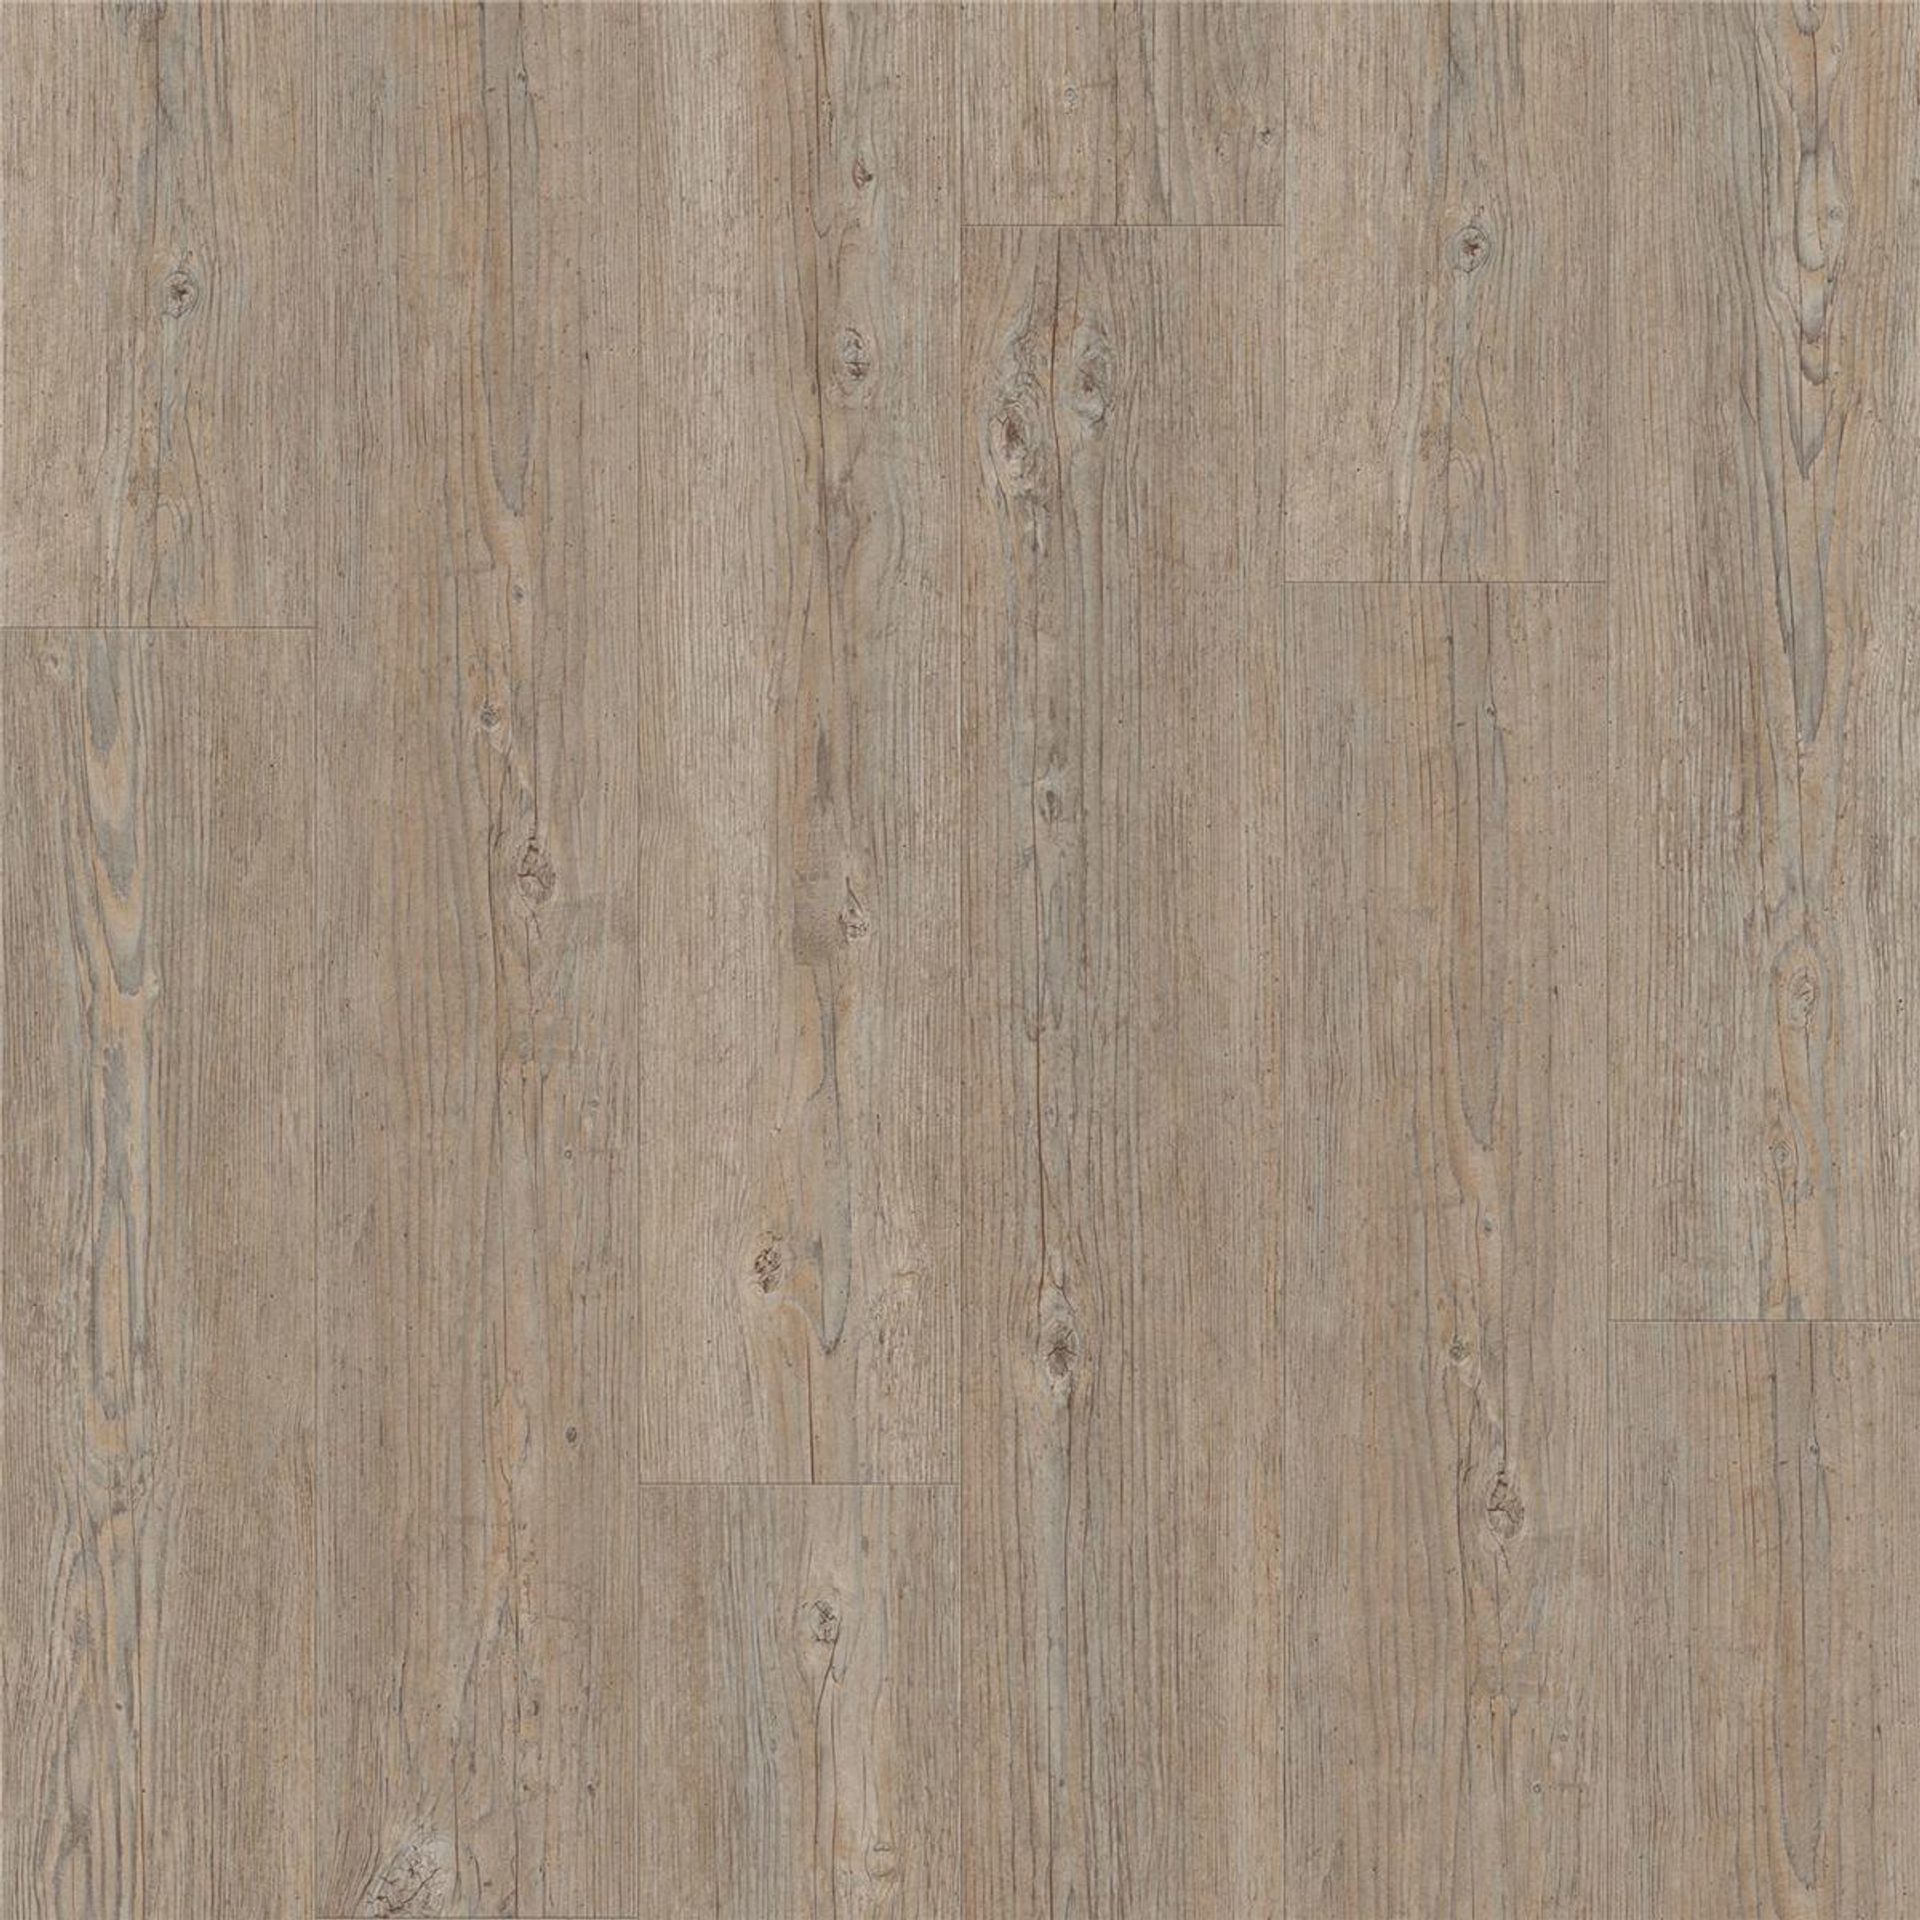 Designboden CLASSICS-Brushed Pine-Brown Planke 121,1 cm x 19,05 cm - Nutzschichtdicke 0,30 mm